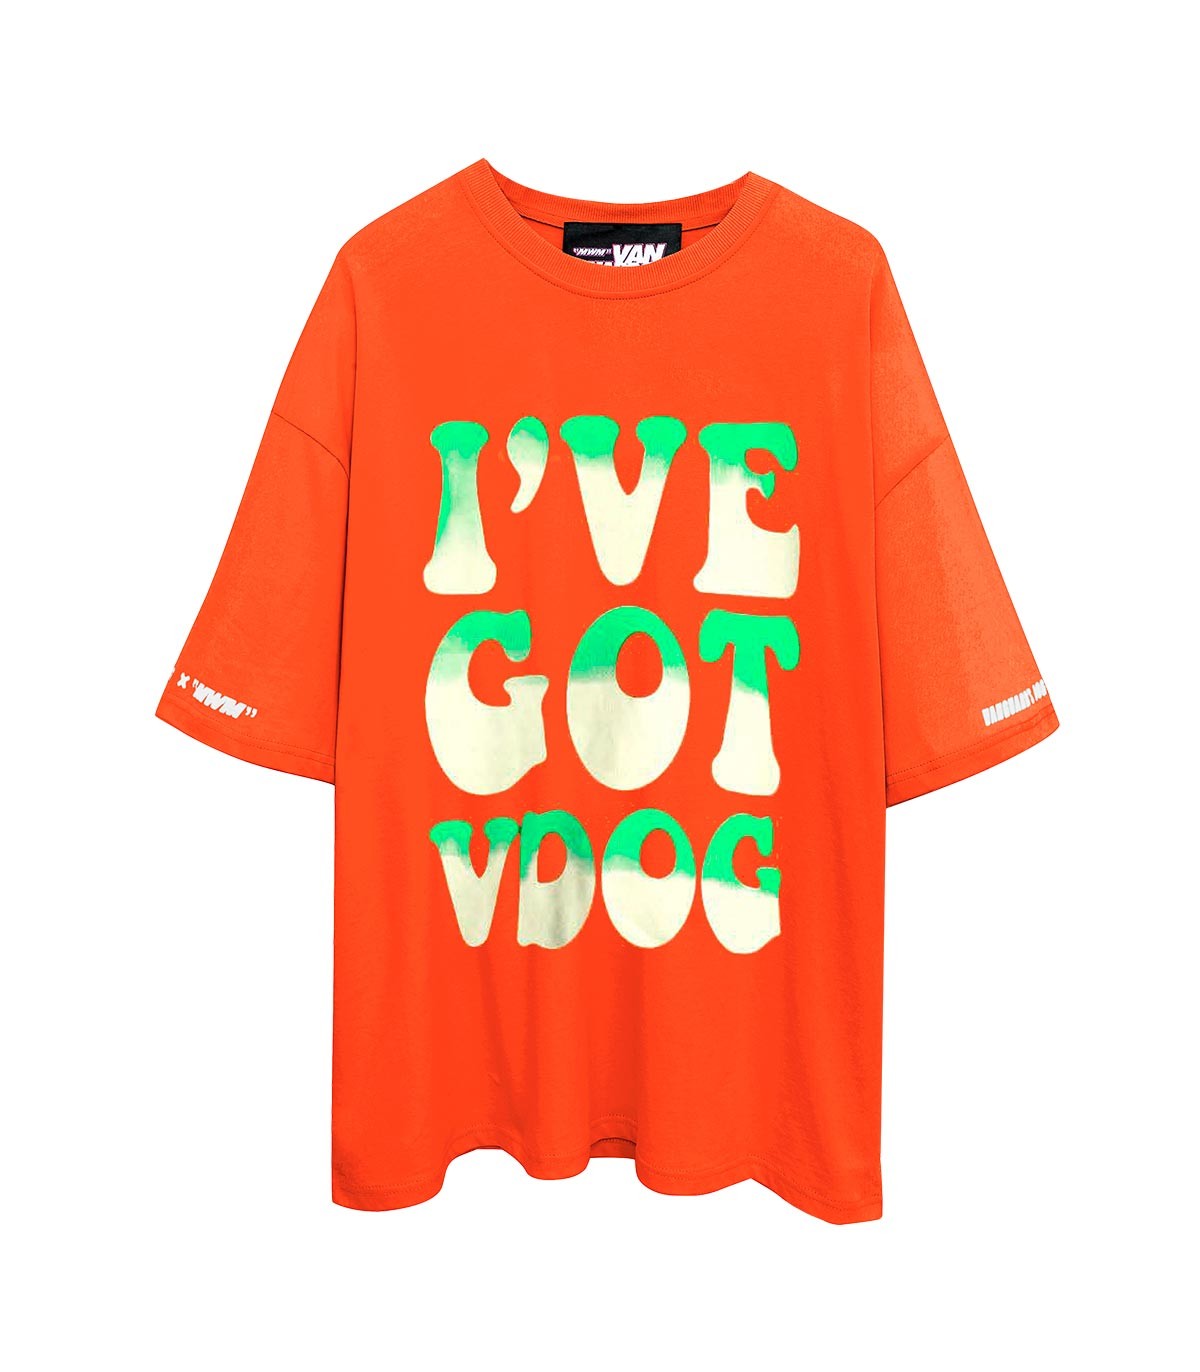 Mod Wave Movement - Camiseta Vanguards Dog 'I've Got VDog'